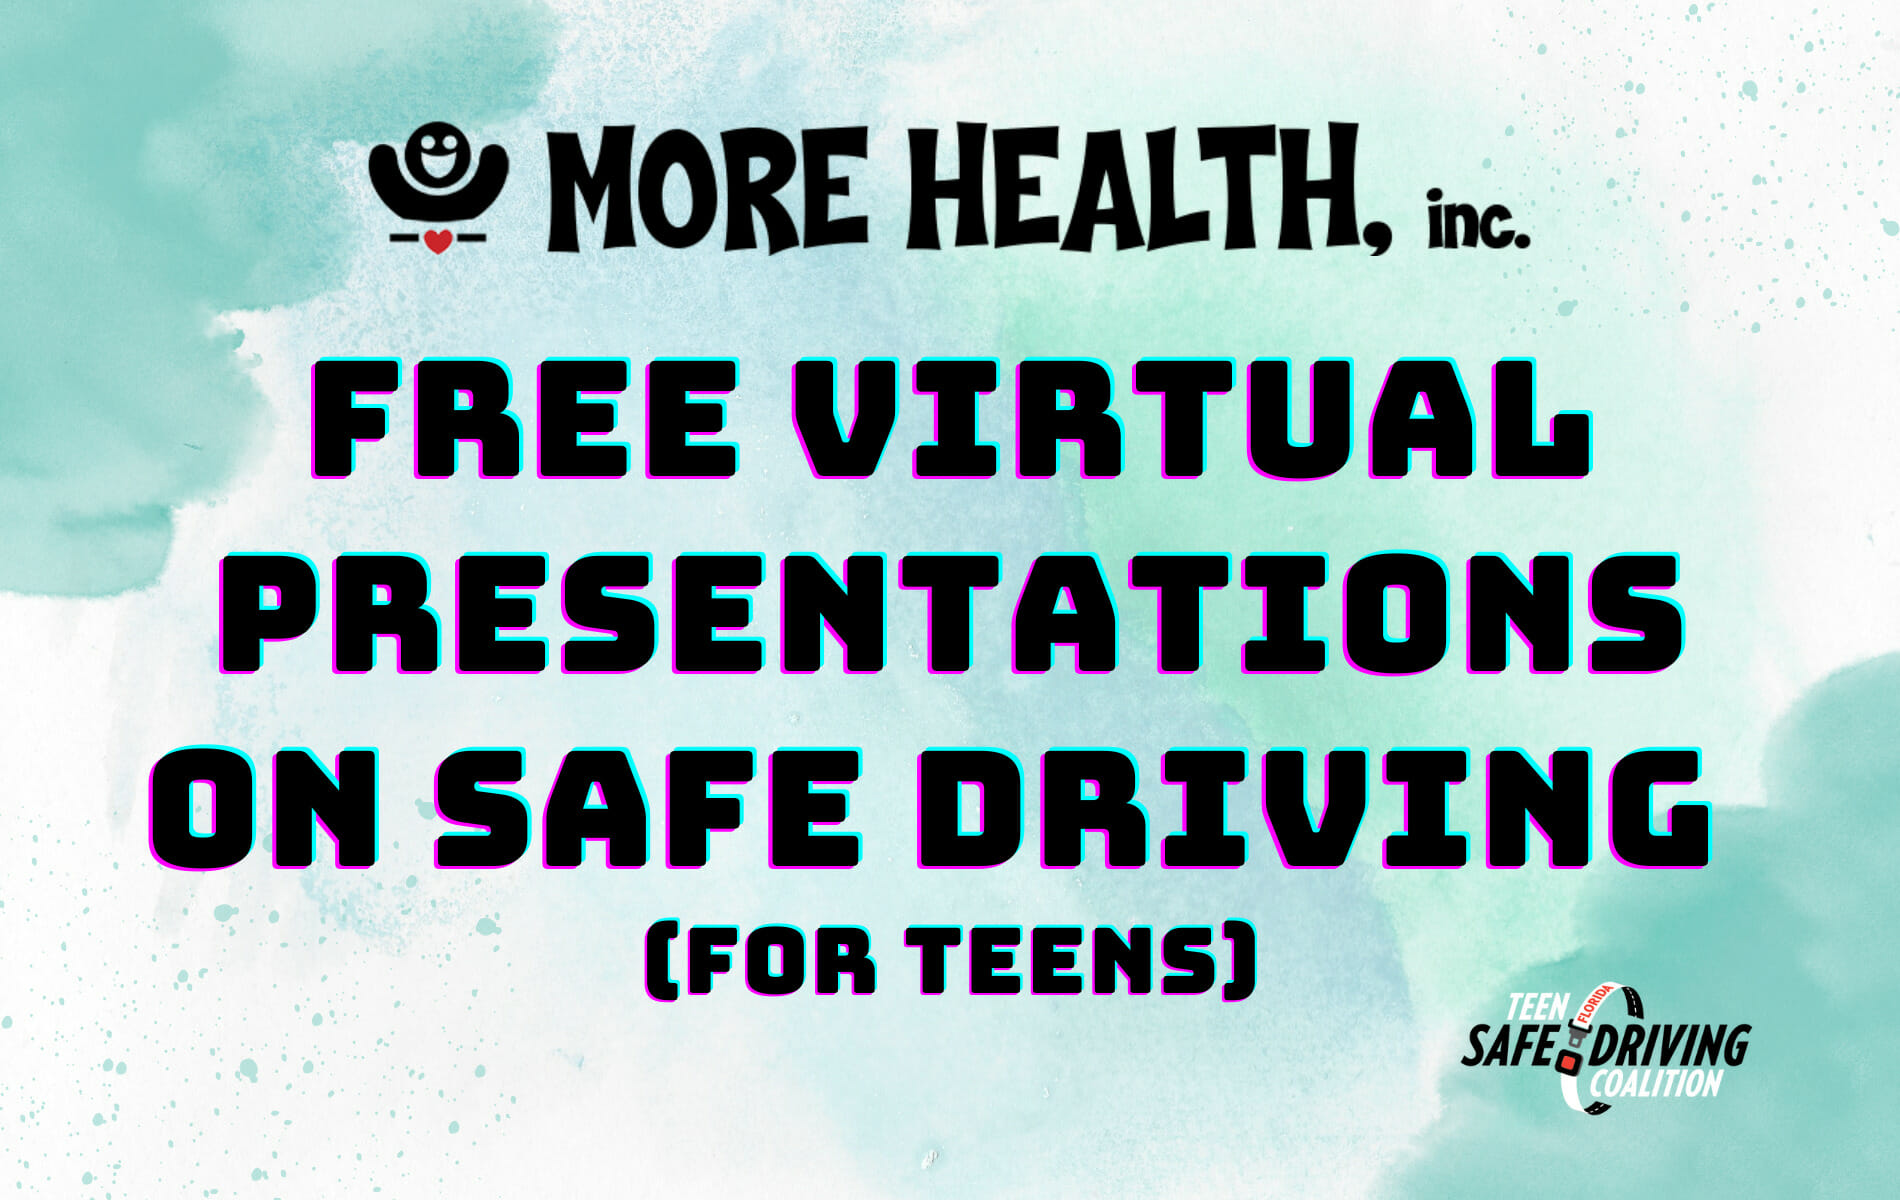 More Health offers Free Virtual Lesson Presentation